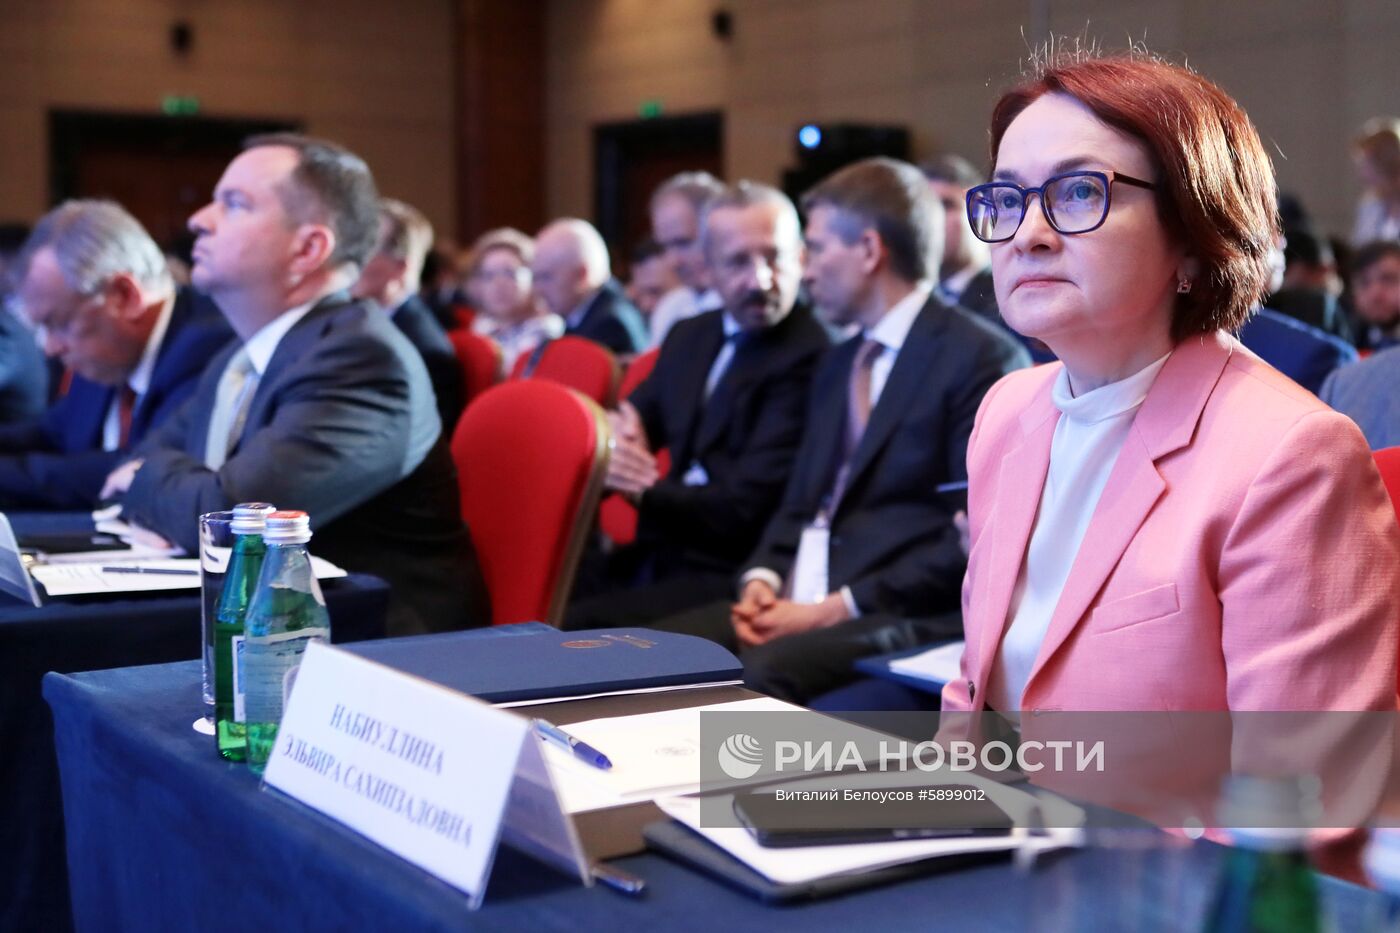 Съезд Ассоциации банков России 